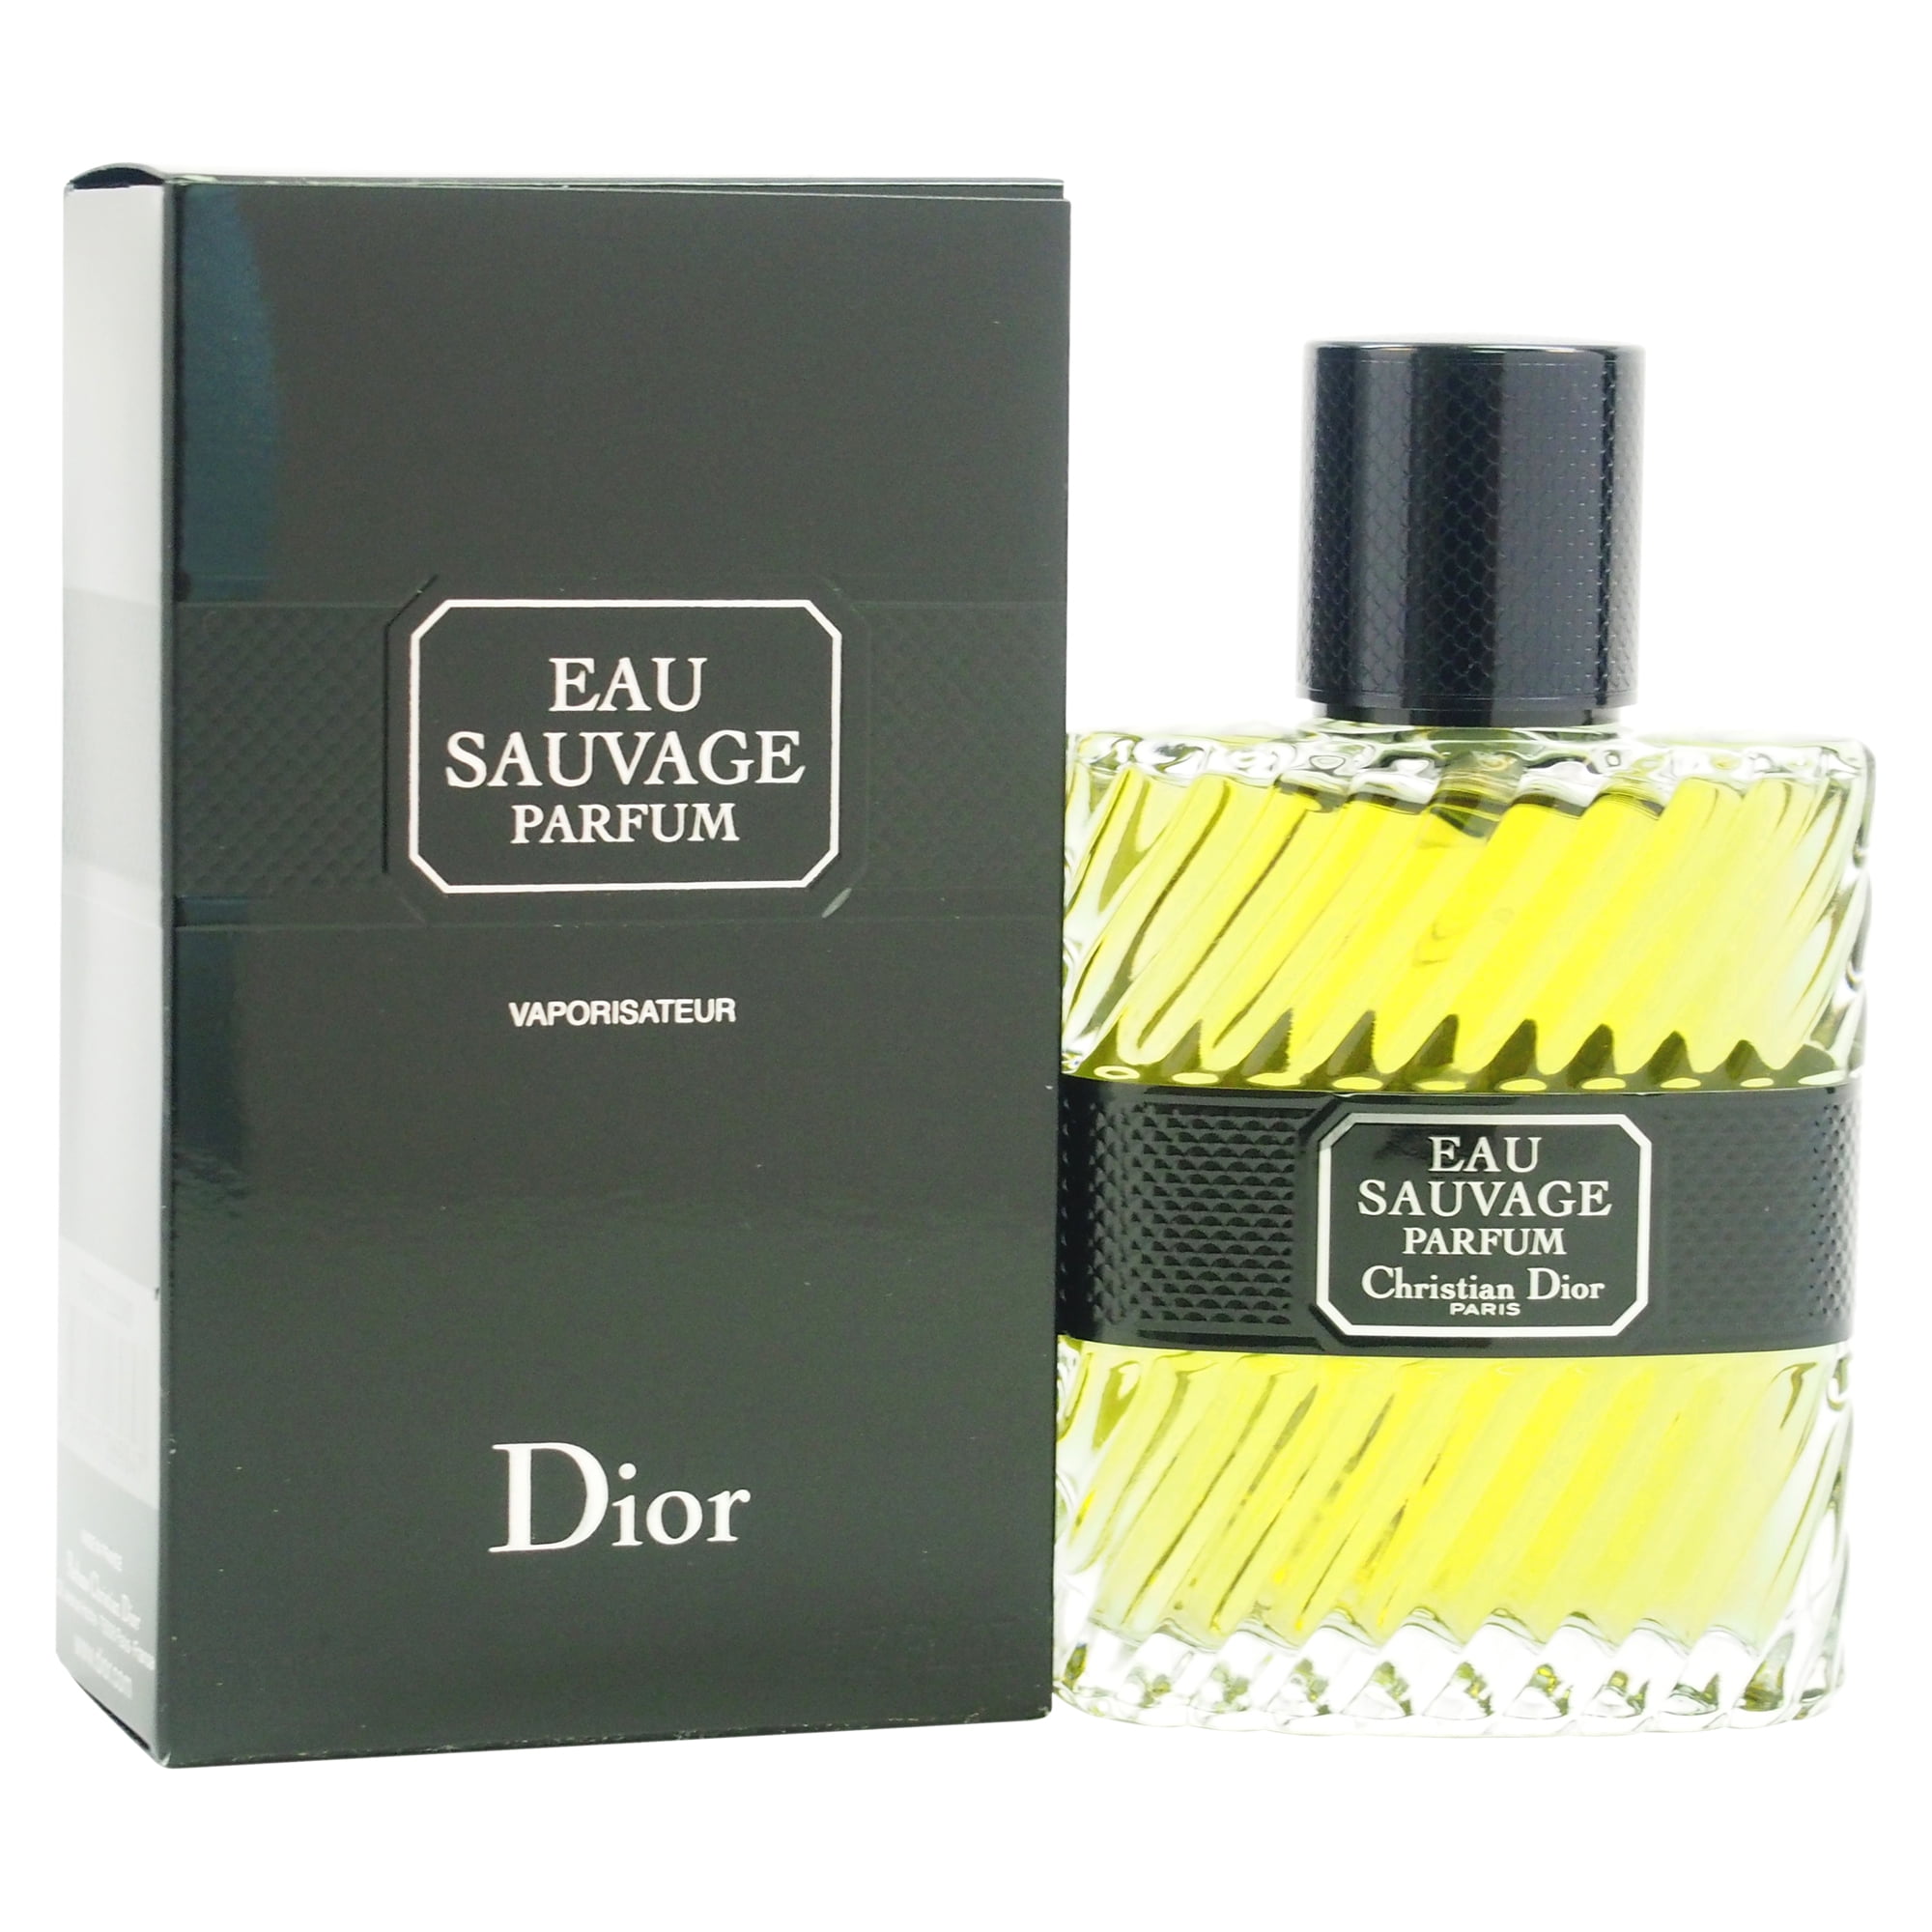 eau sauvage parfum christian dior for men